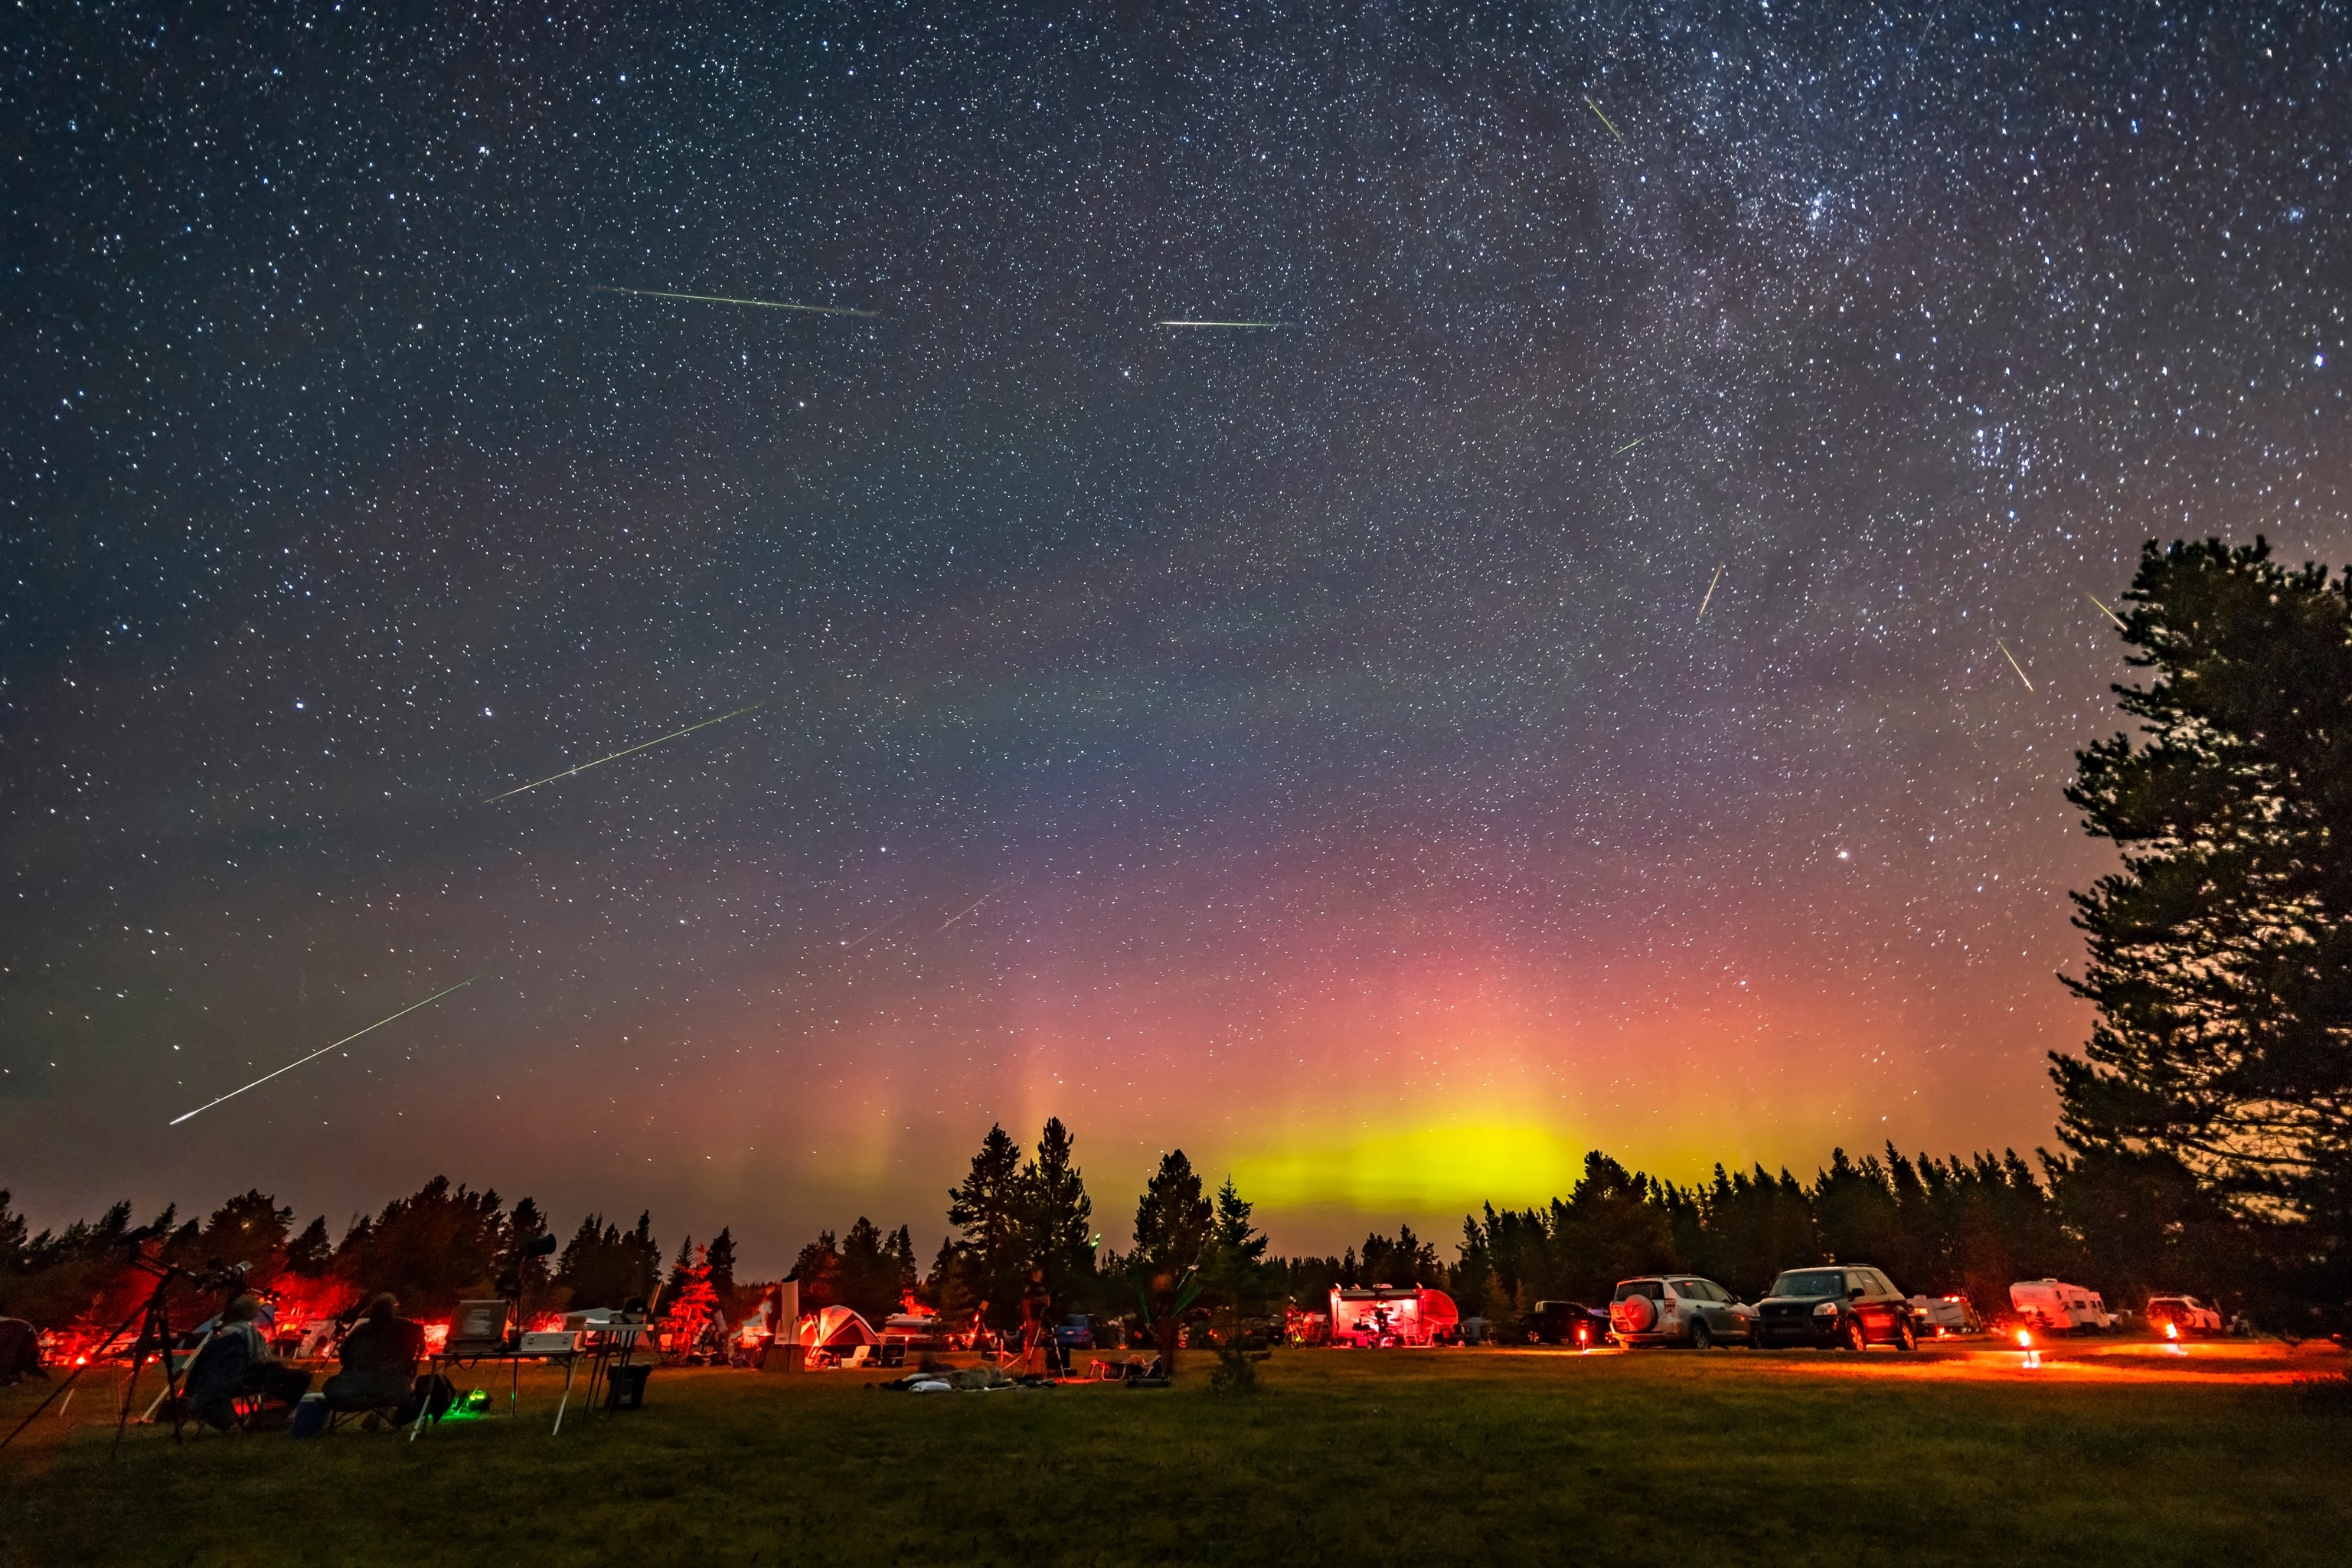 Perseid meteor shower over the Saskatchewan Summer Star Party, with an aurora as a bonus